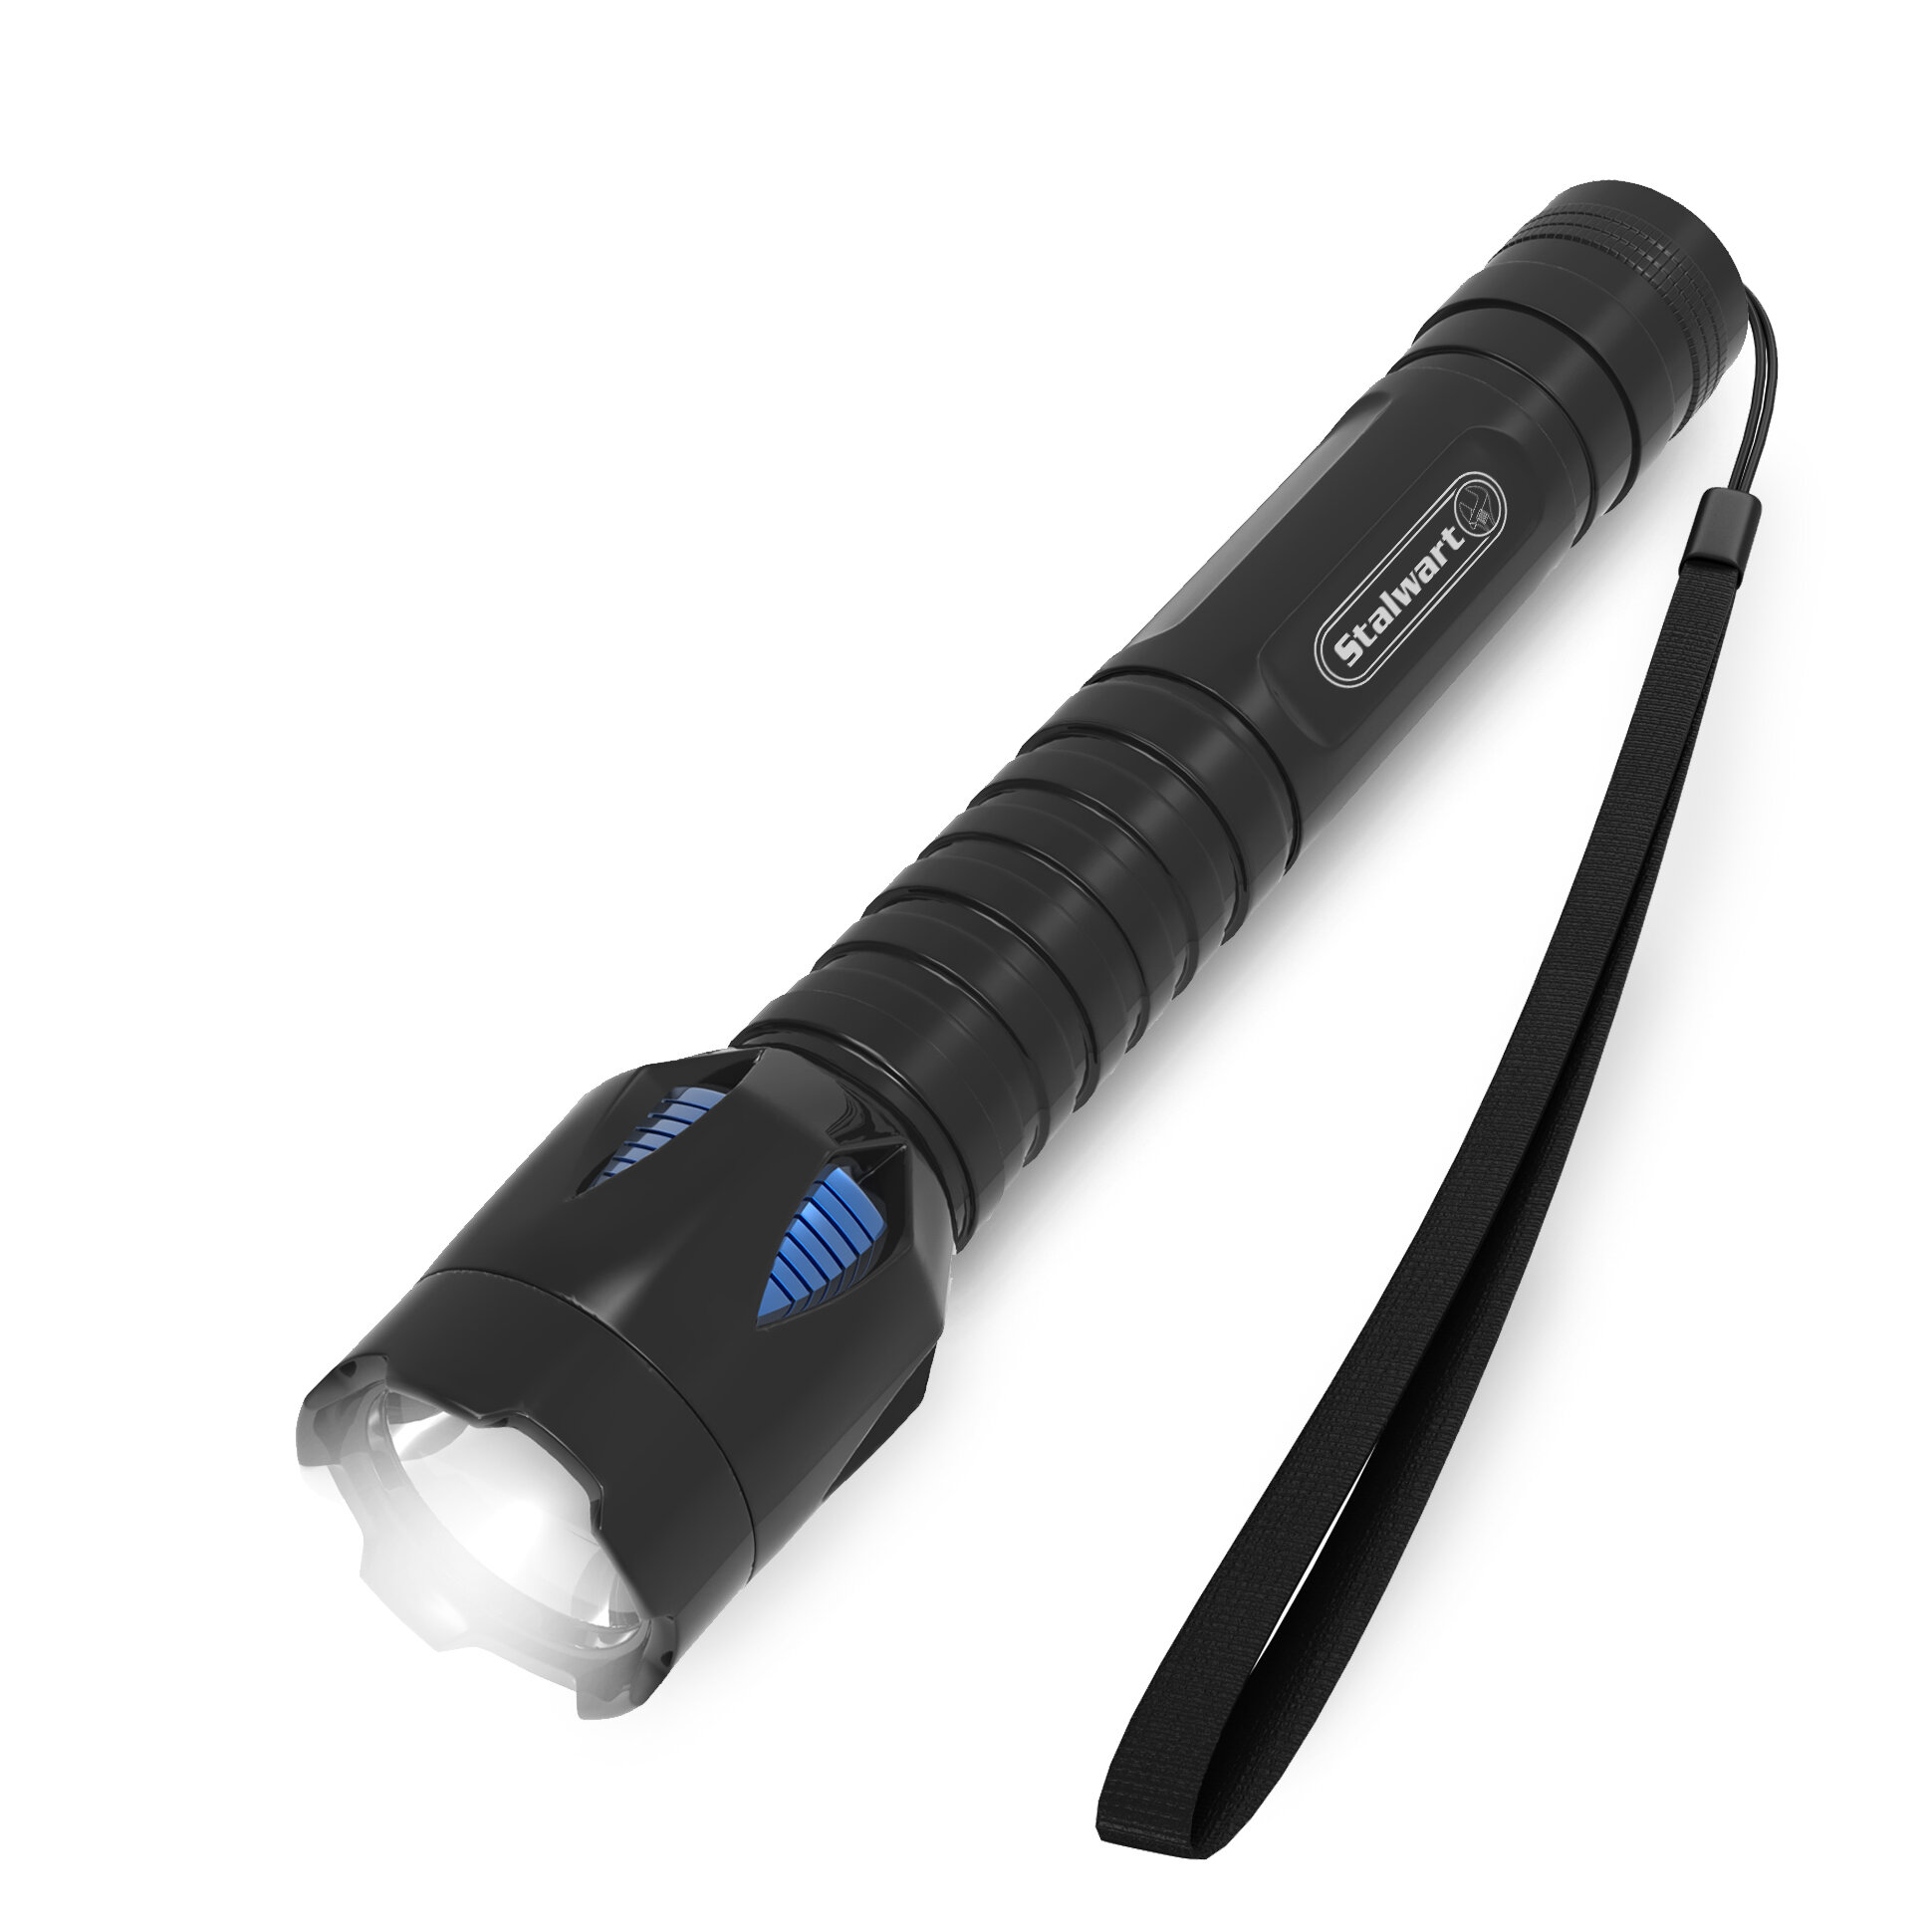 Stalwart 3-Way 24 LED Emergency Flashlight with Nightlight - Black